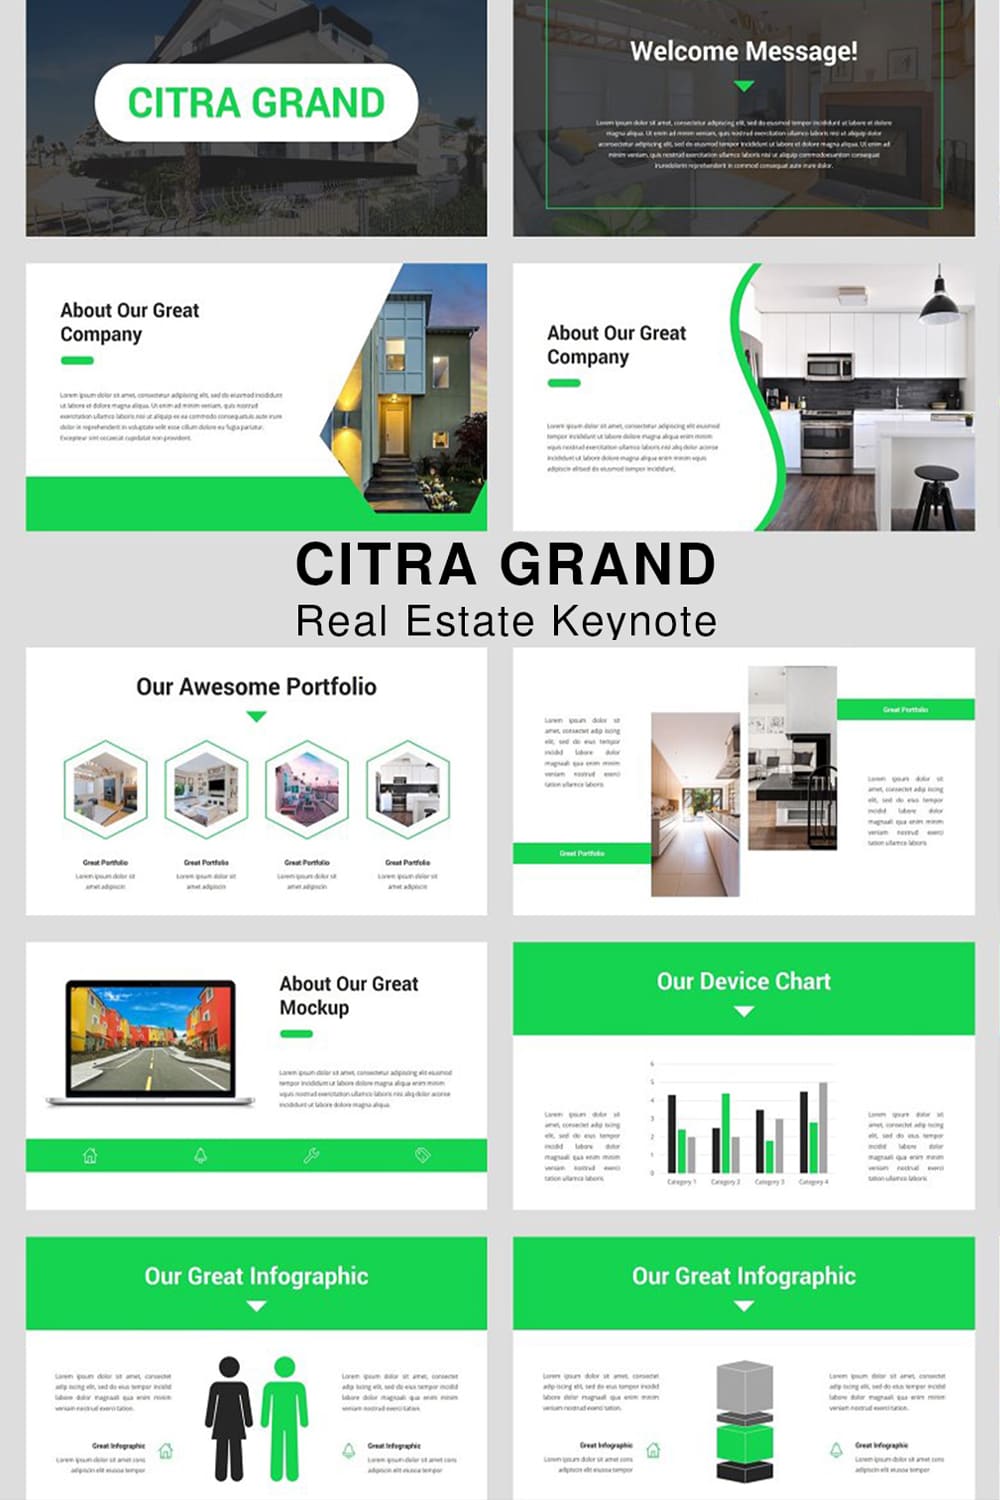 Pinterest - Citra Grand - Real Estate Keynote.